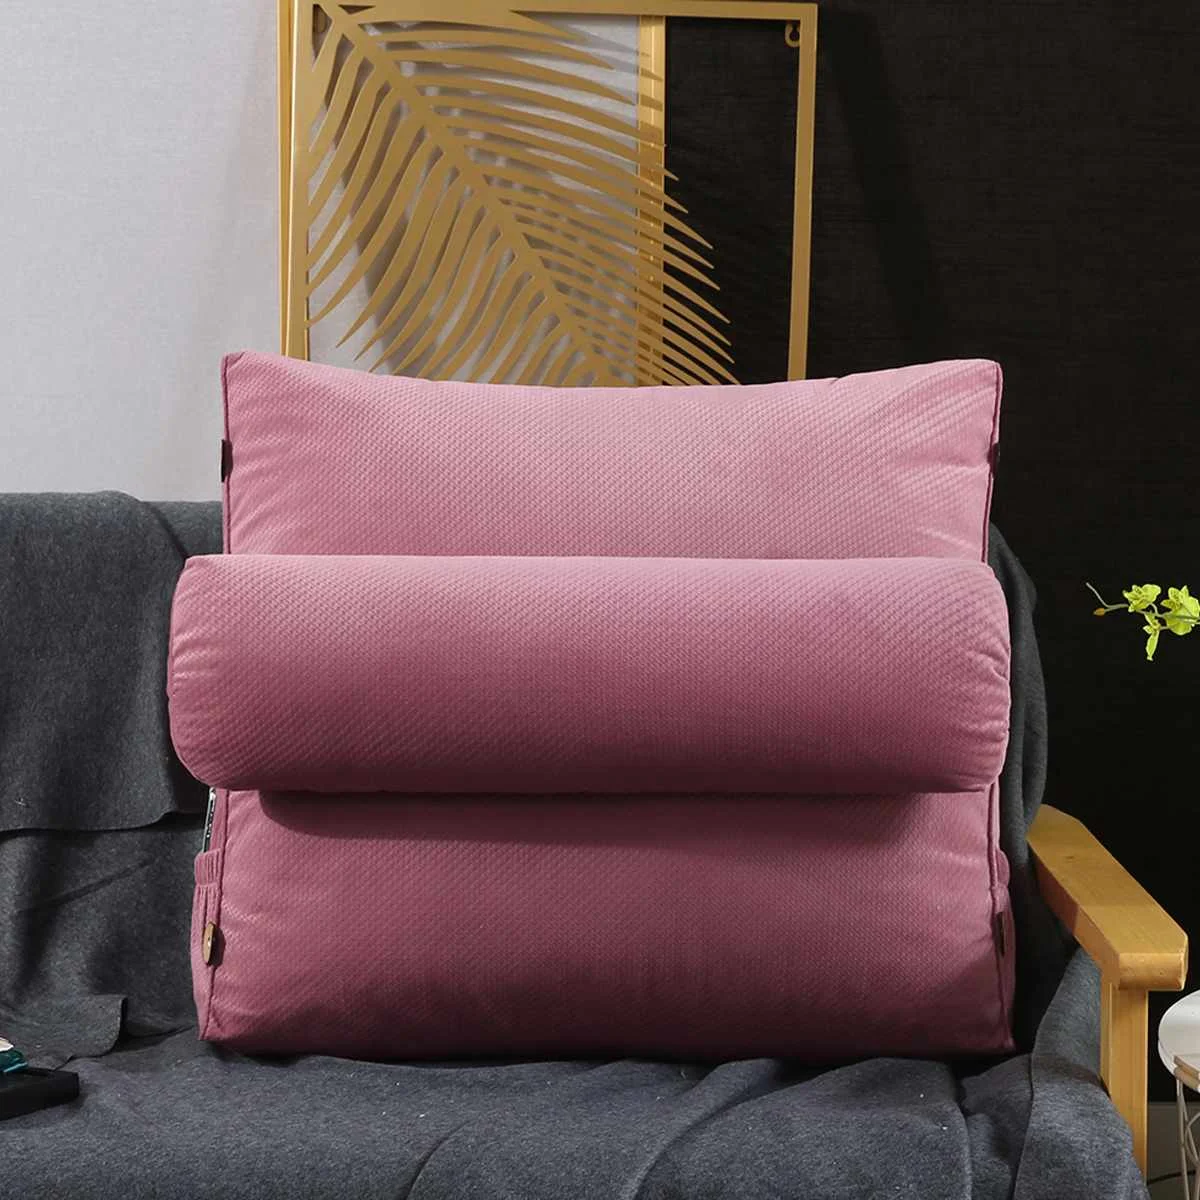 https://ae01.alicdn.com/kf/Hcee4feb0b7714ad48f2e4d8ad0666f3aJ/60cmx20cmx50cm-Office-Chair-Back-Rest-Pillow-Support-Lumbar-Cushion-Recliner-TV-Reading-Pillows-for-Living-Room.jpg